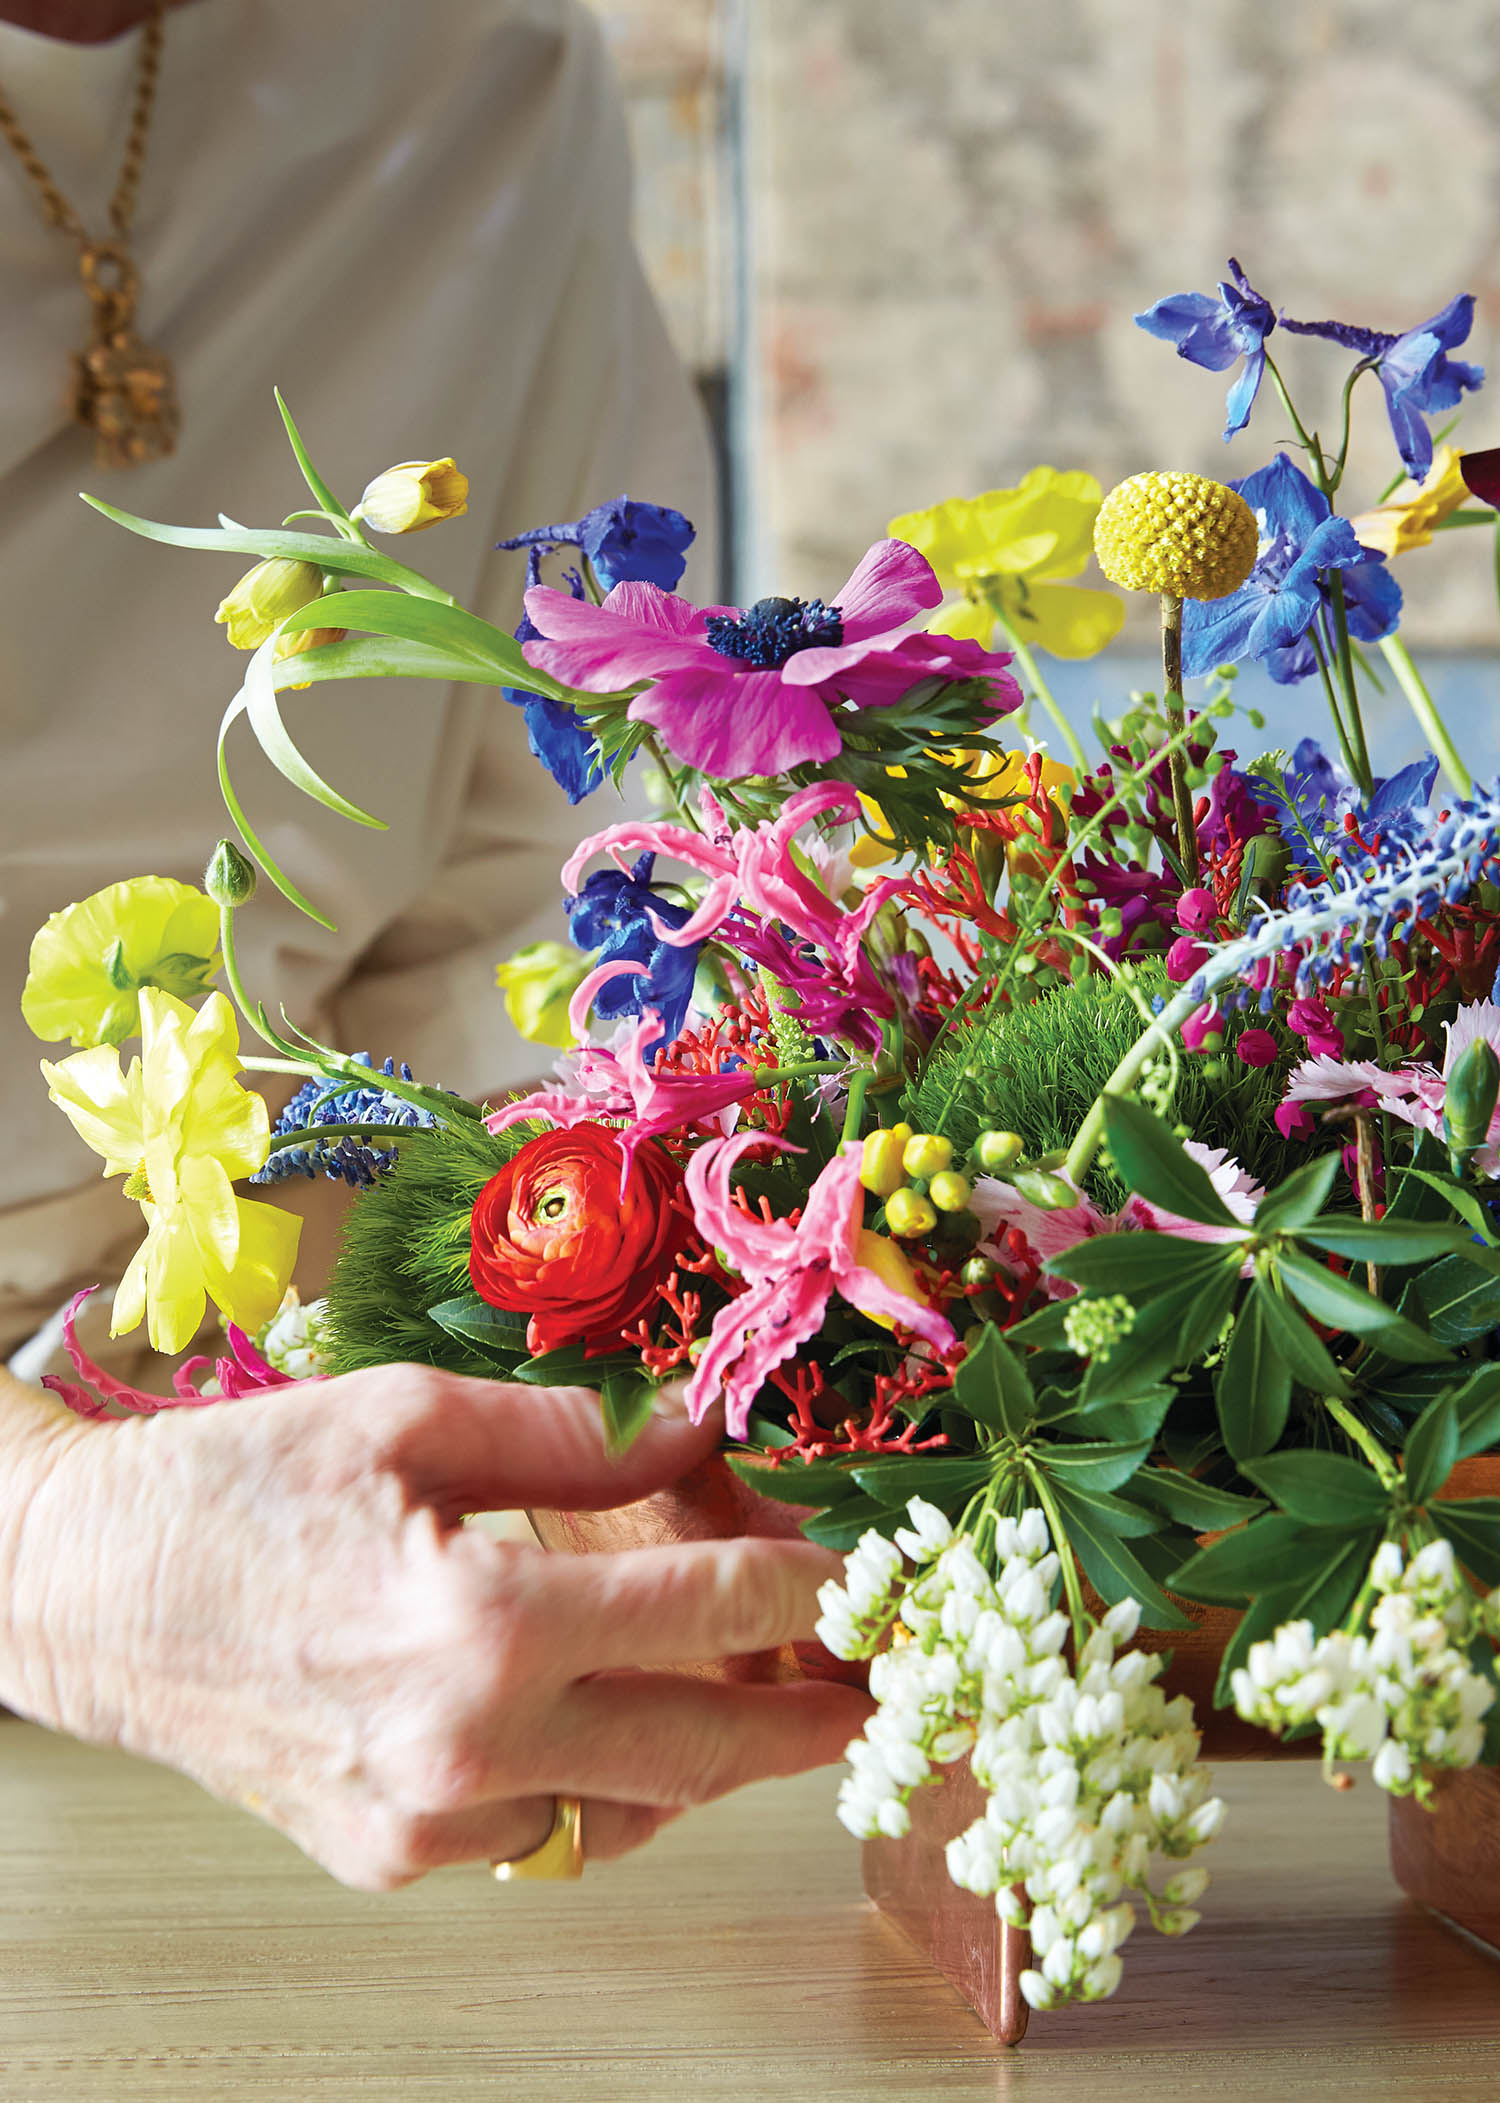 Hands arranging flowers.